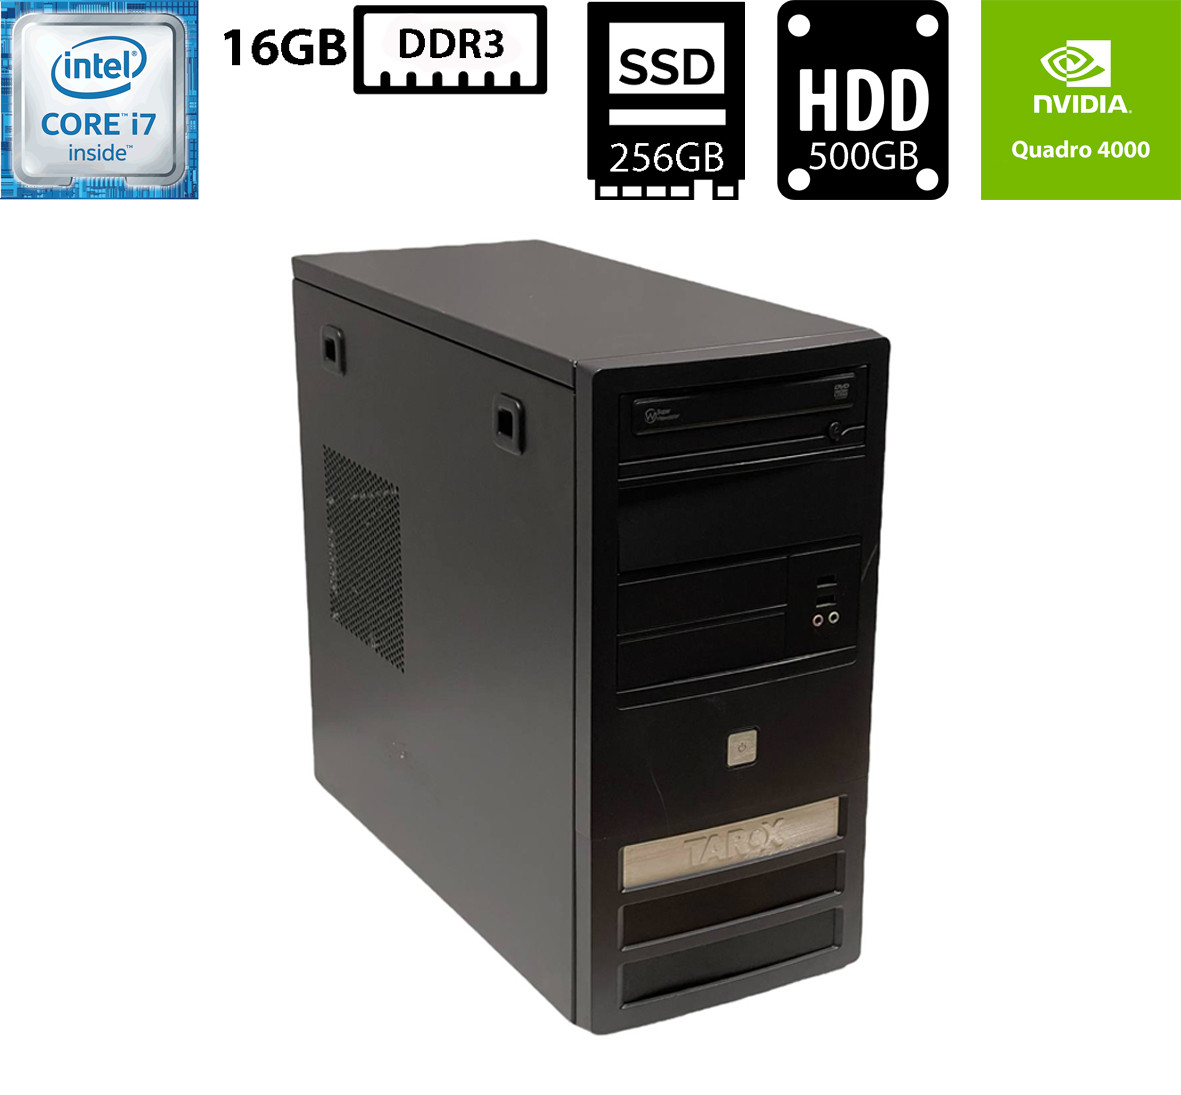 Комп'ютер Asus P8B75-M Tower/Intel Core i7-3770 3.40GHz/16GB DDR3/SSD 256GB+HDD 500GB/NVIDIA Quadro 4000 (2GB GDDR5)/400W